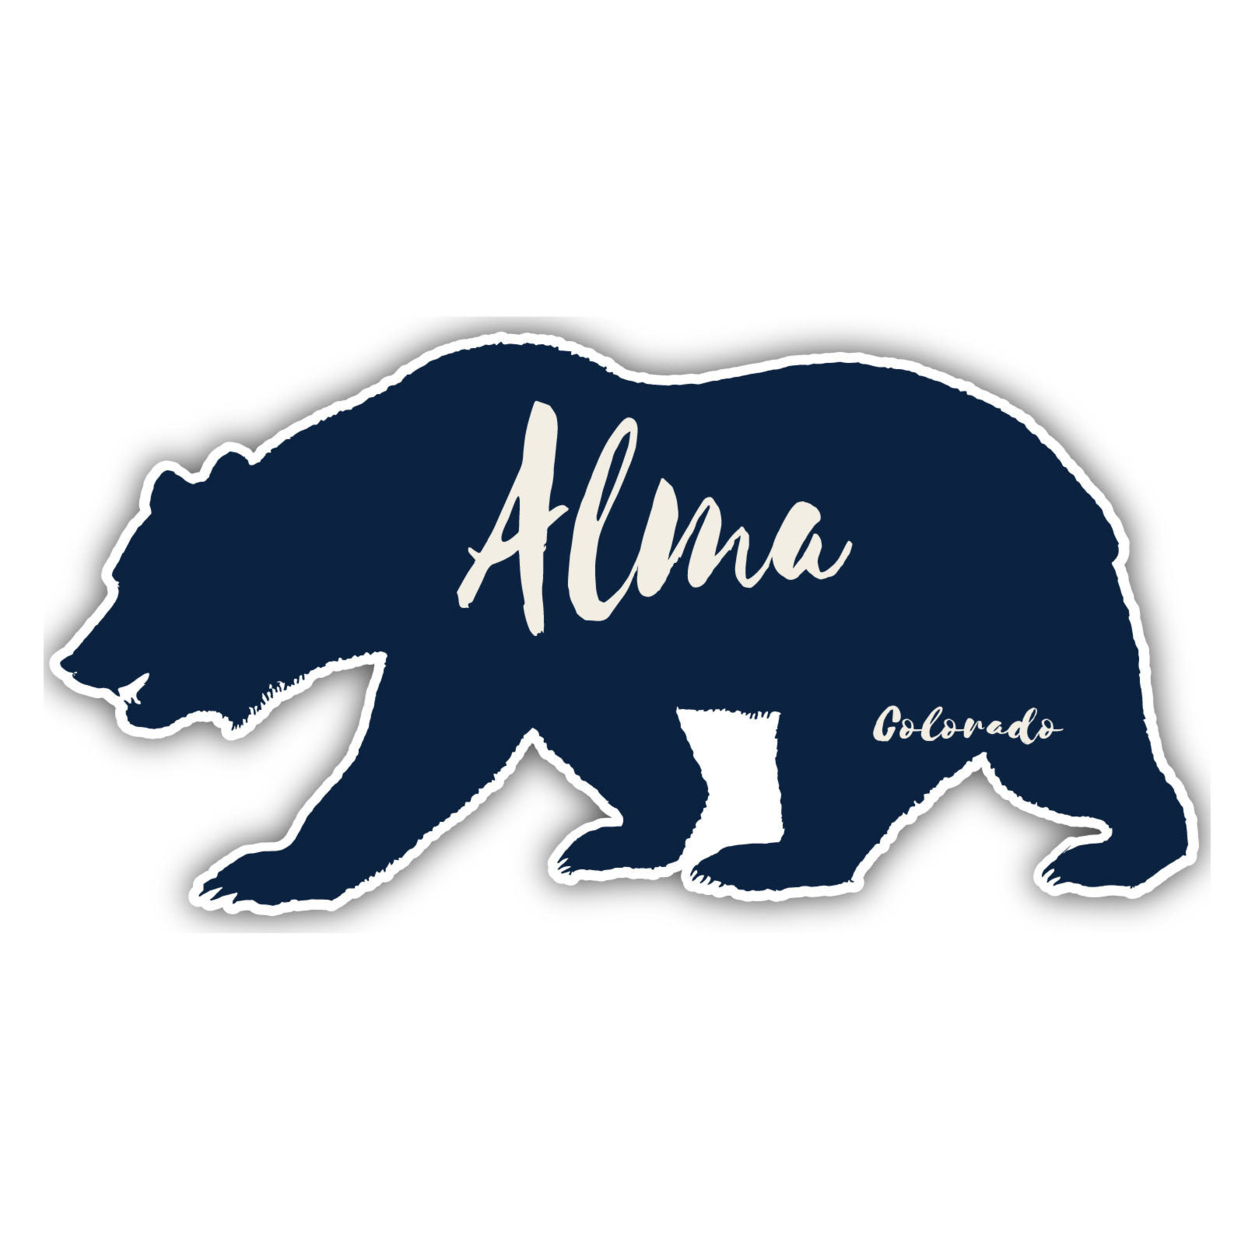 Alma Colorado Souvenir Decorative Stickers (Choose Theme And Size) - Single Unit, 6-Inch, Tent